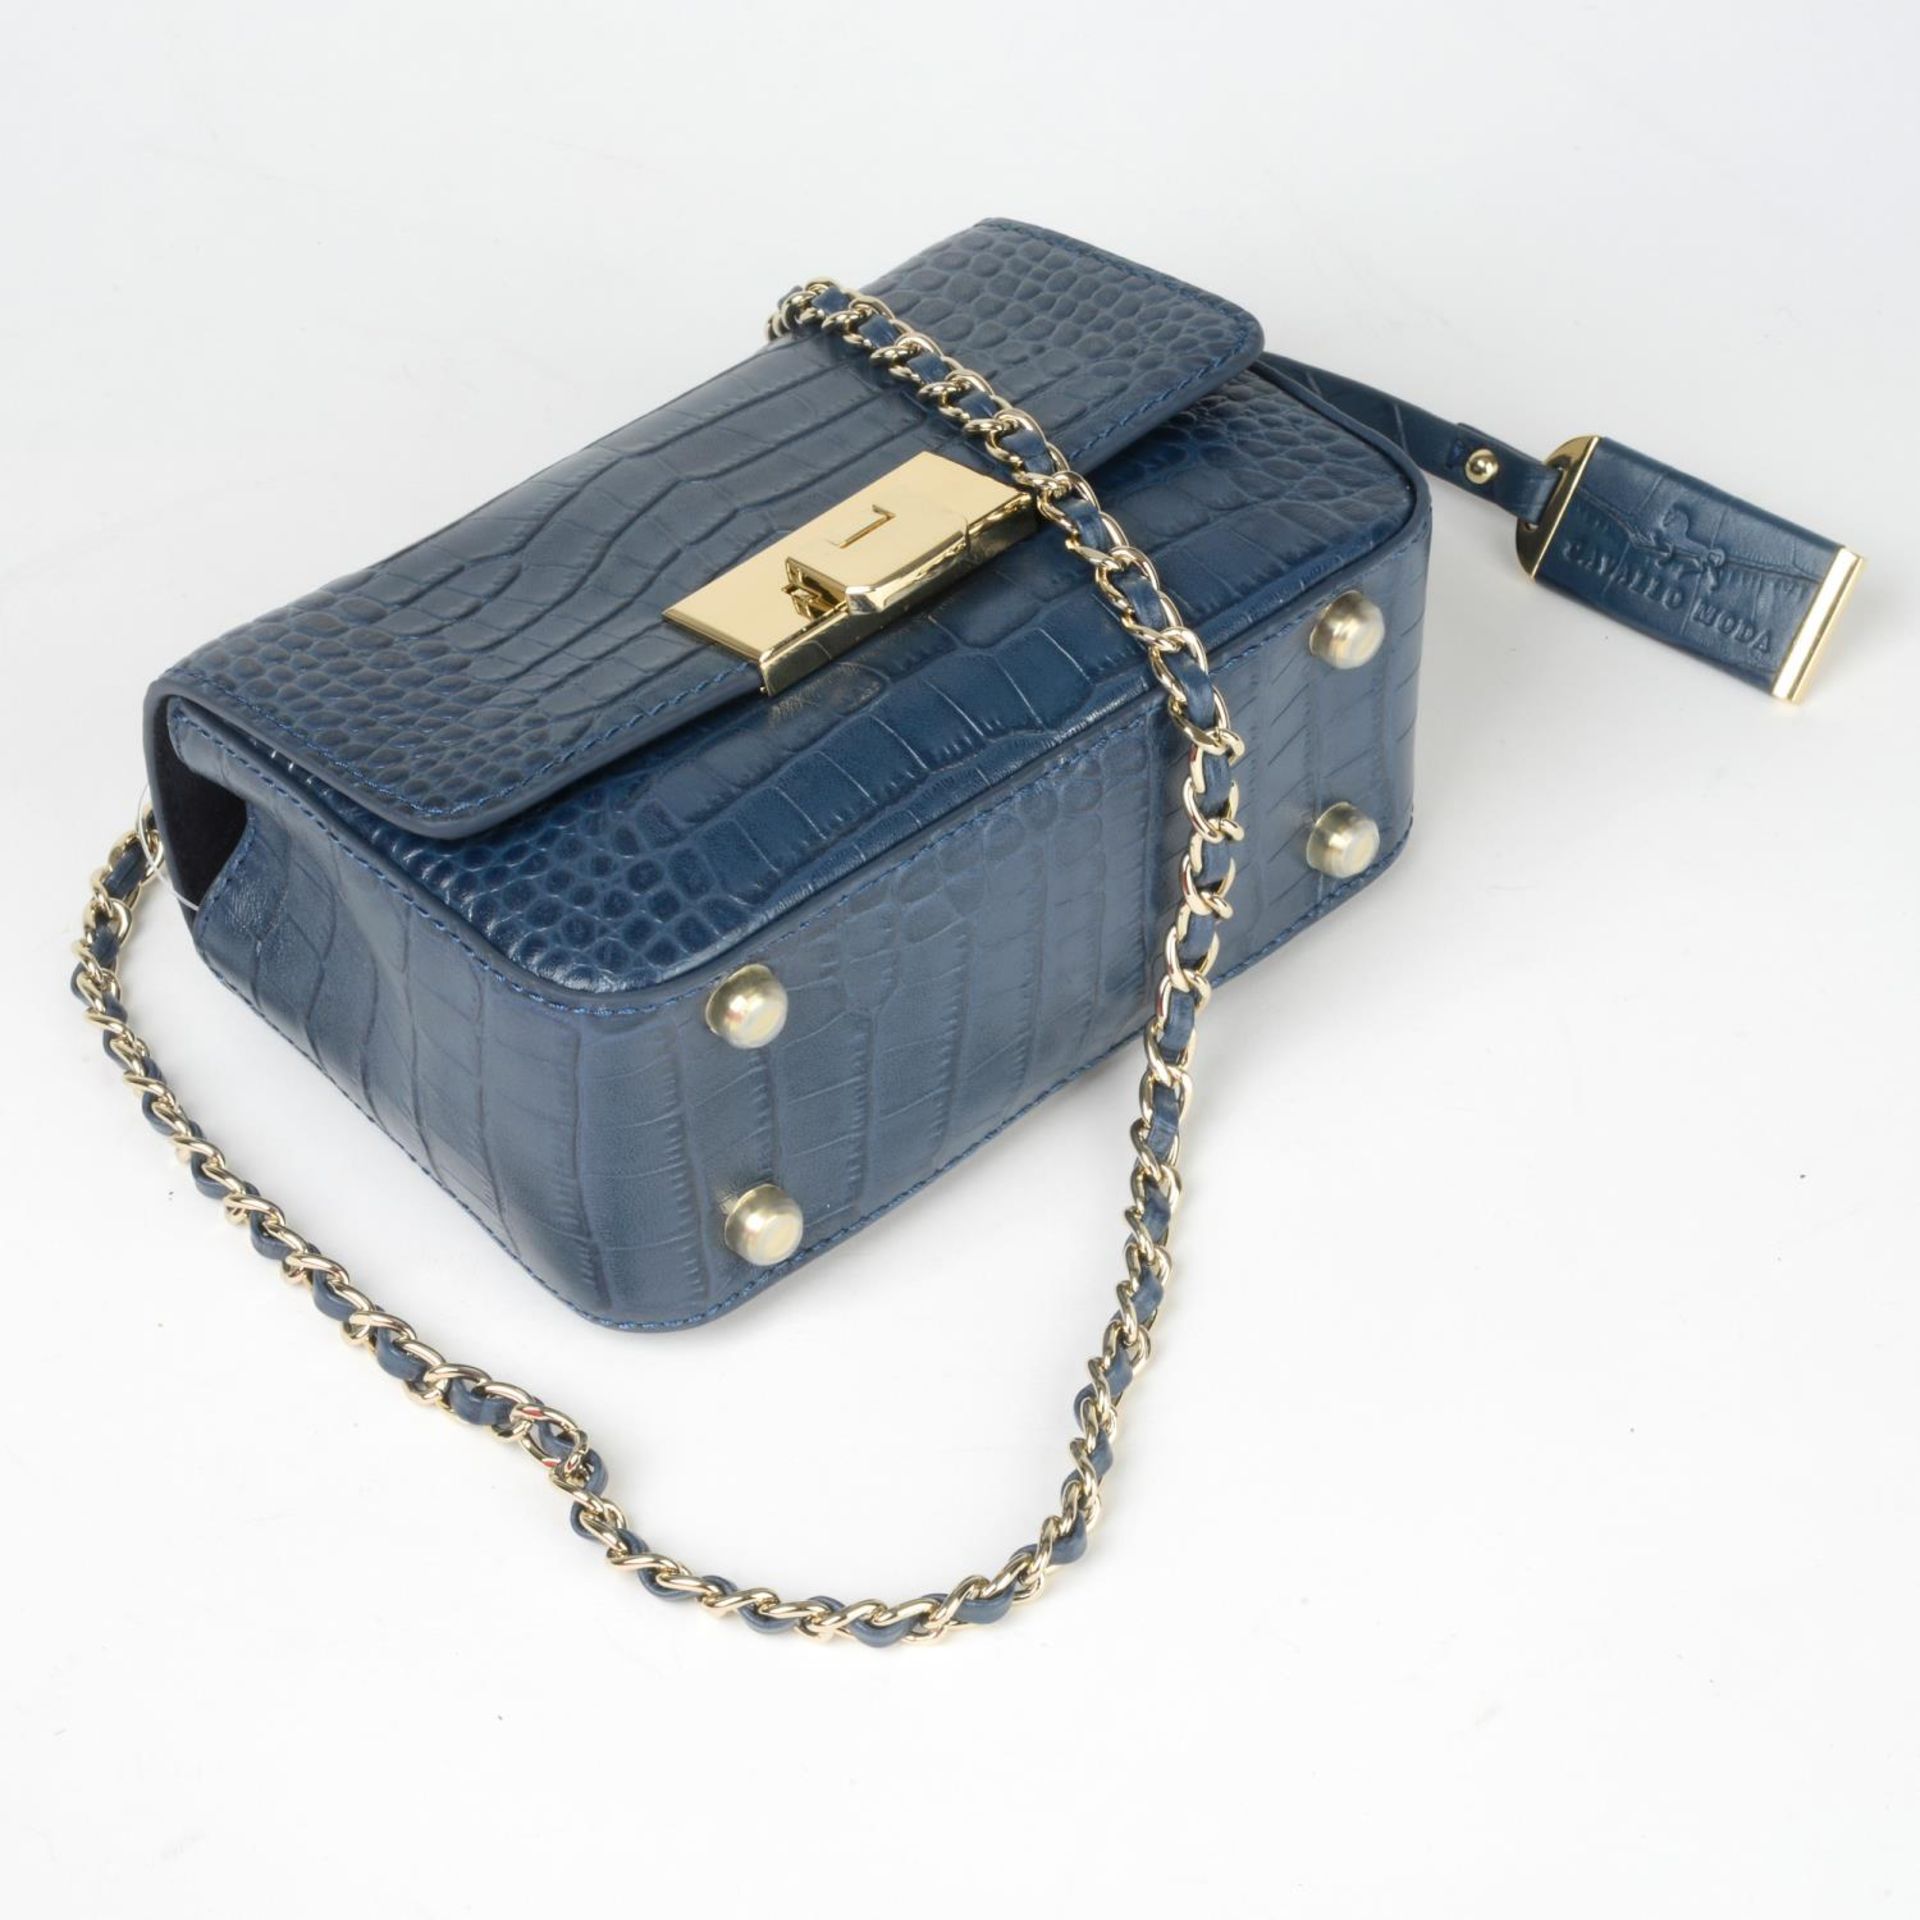 CAVALLO MODA - two leather handbags. - Bild 2 aus 5